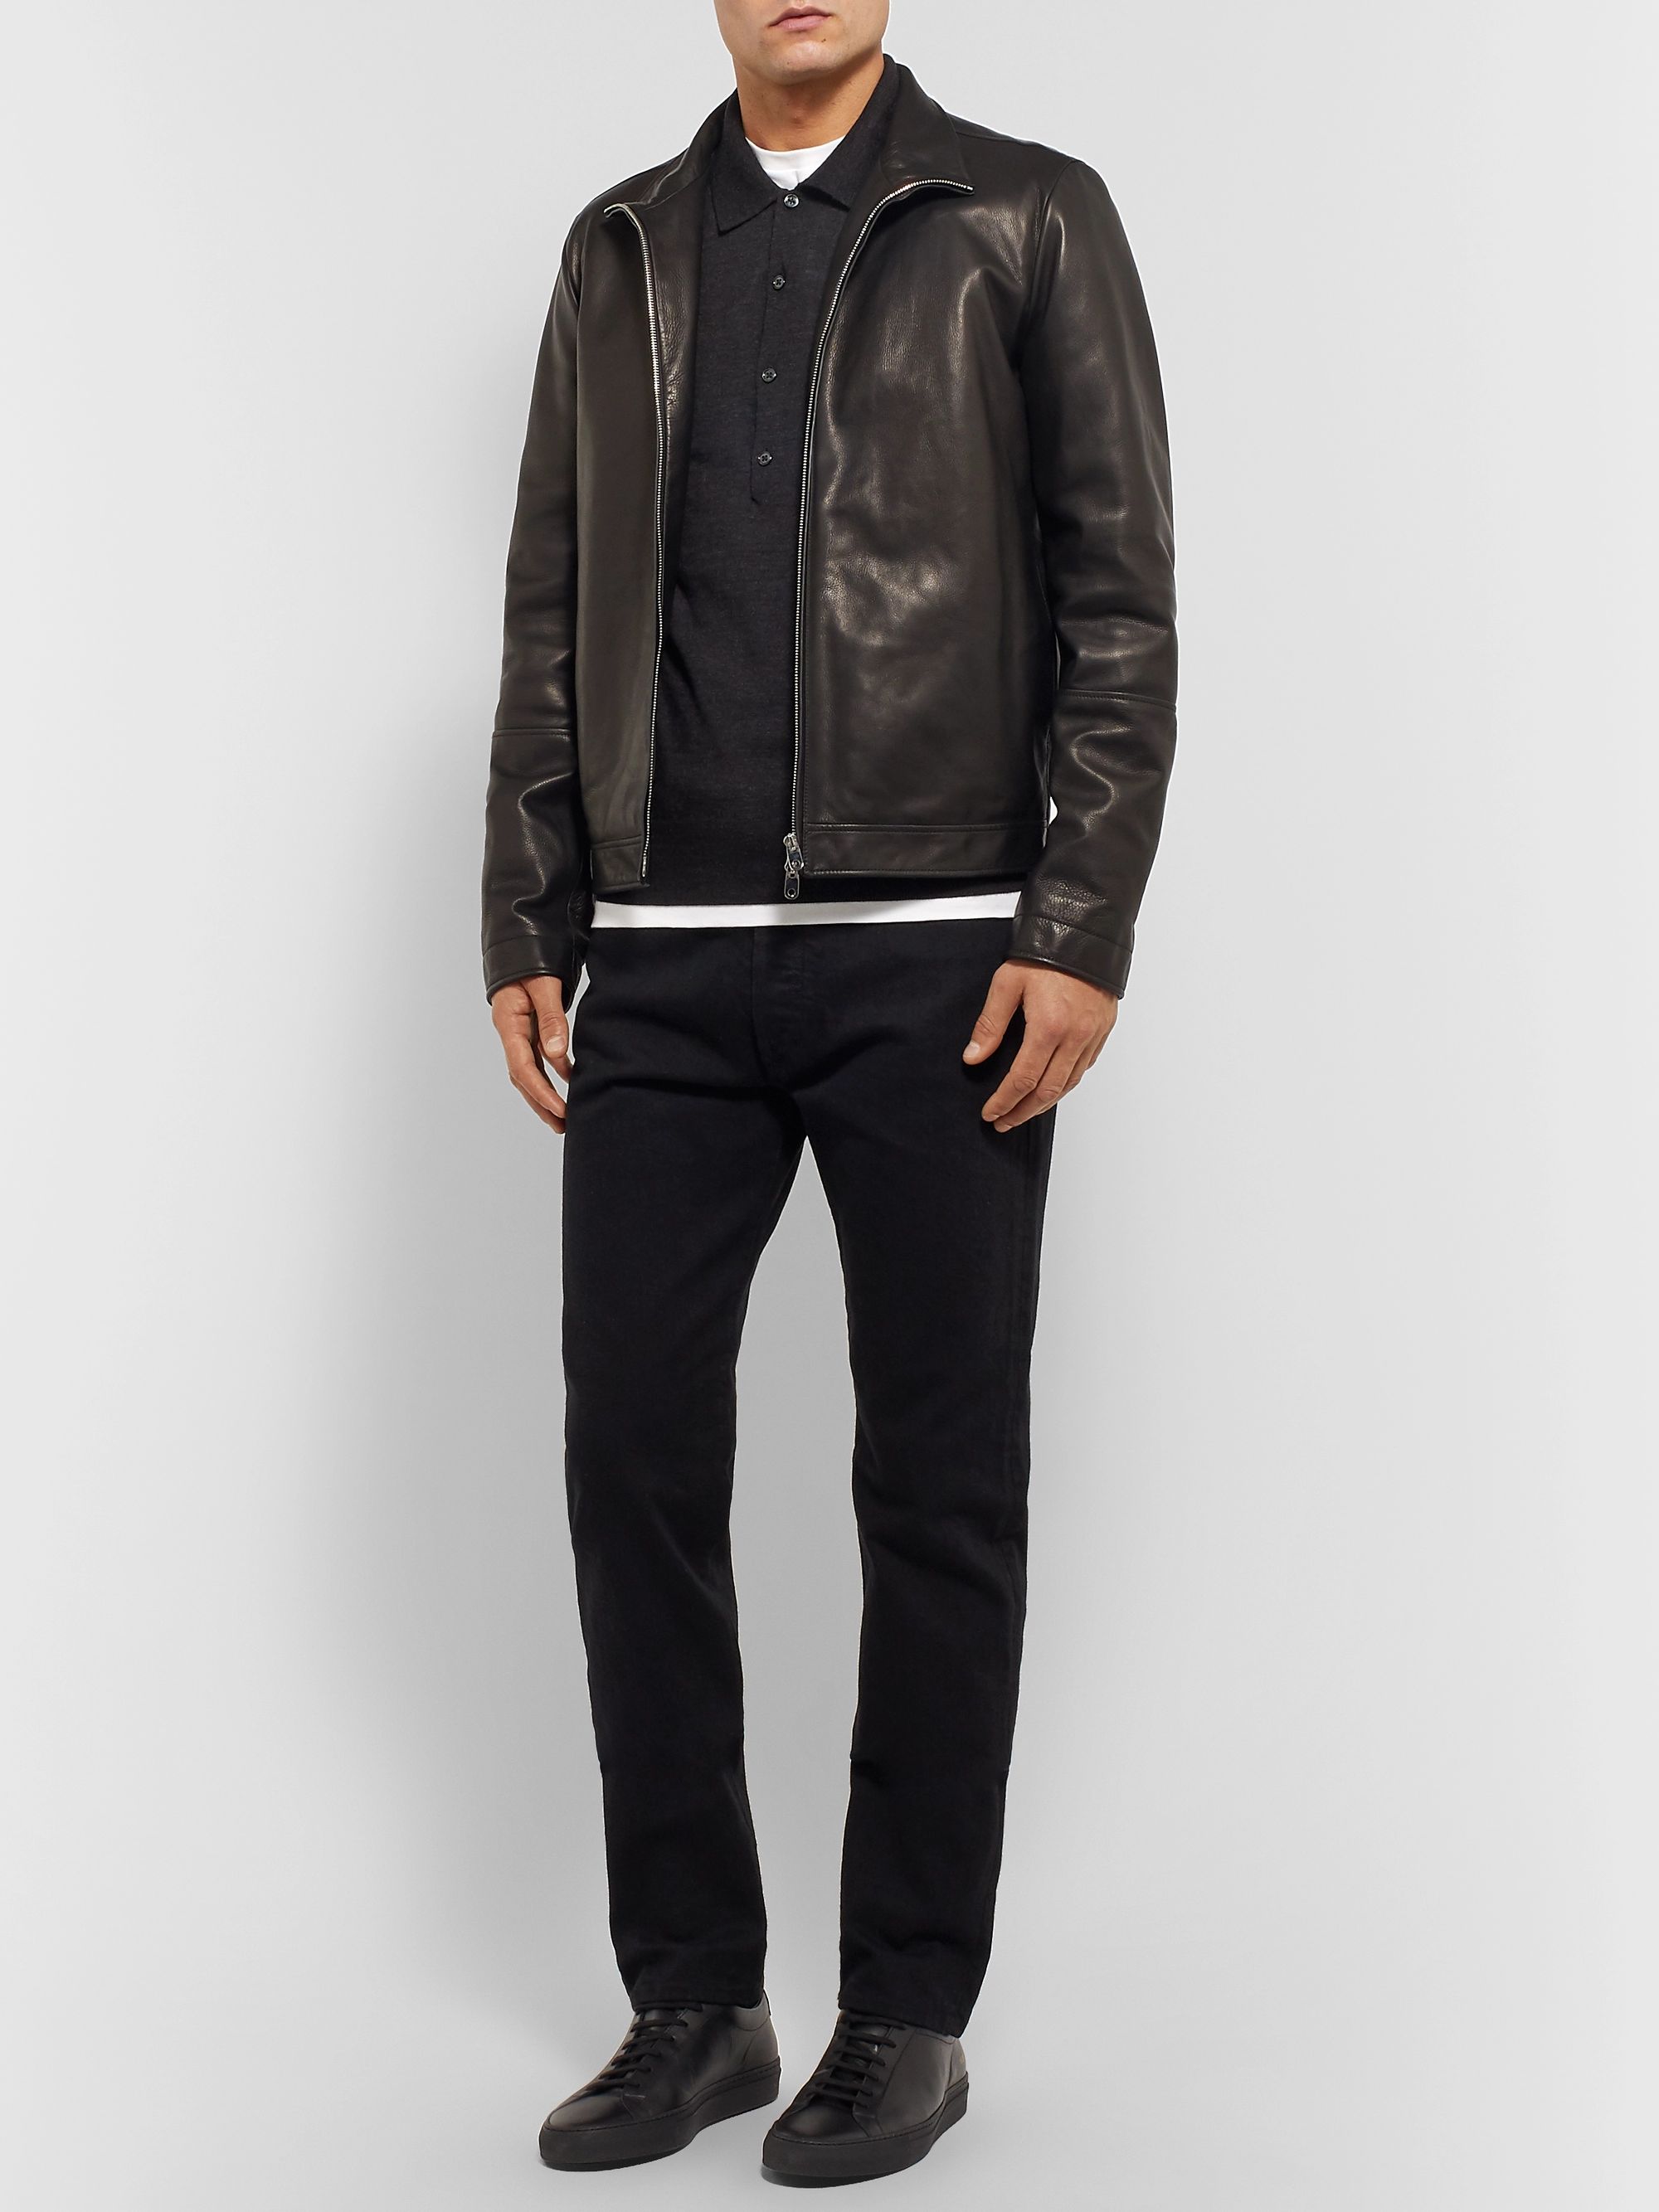 black polo leather jacket